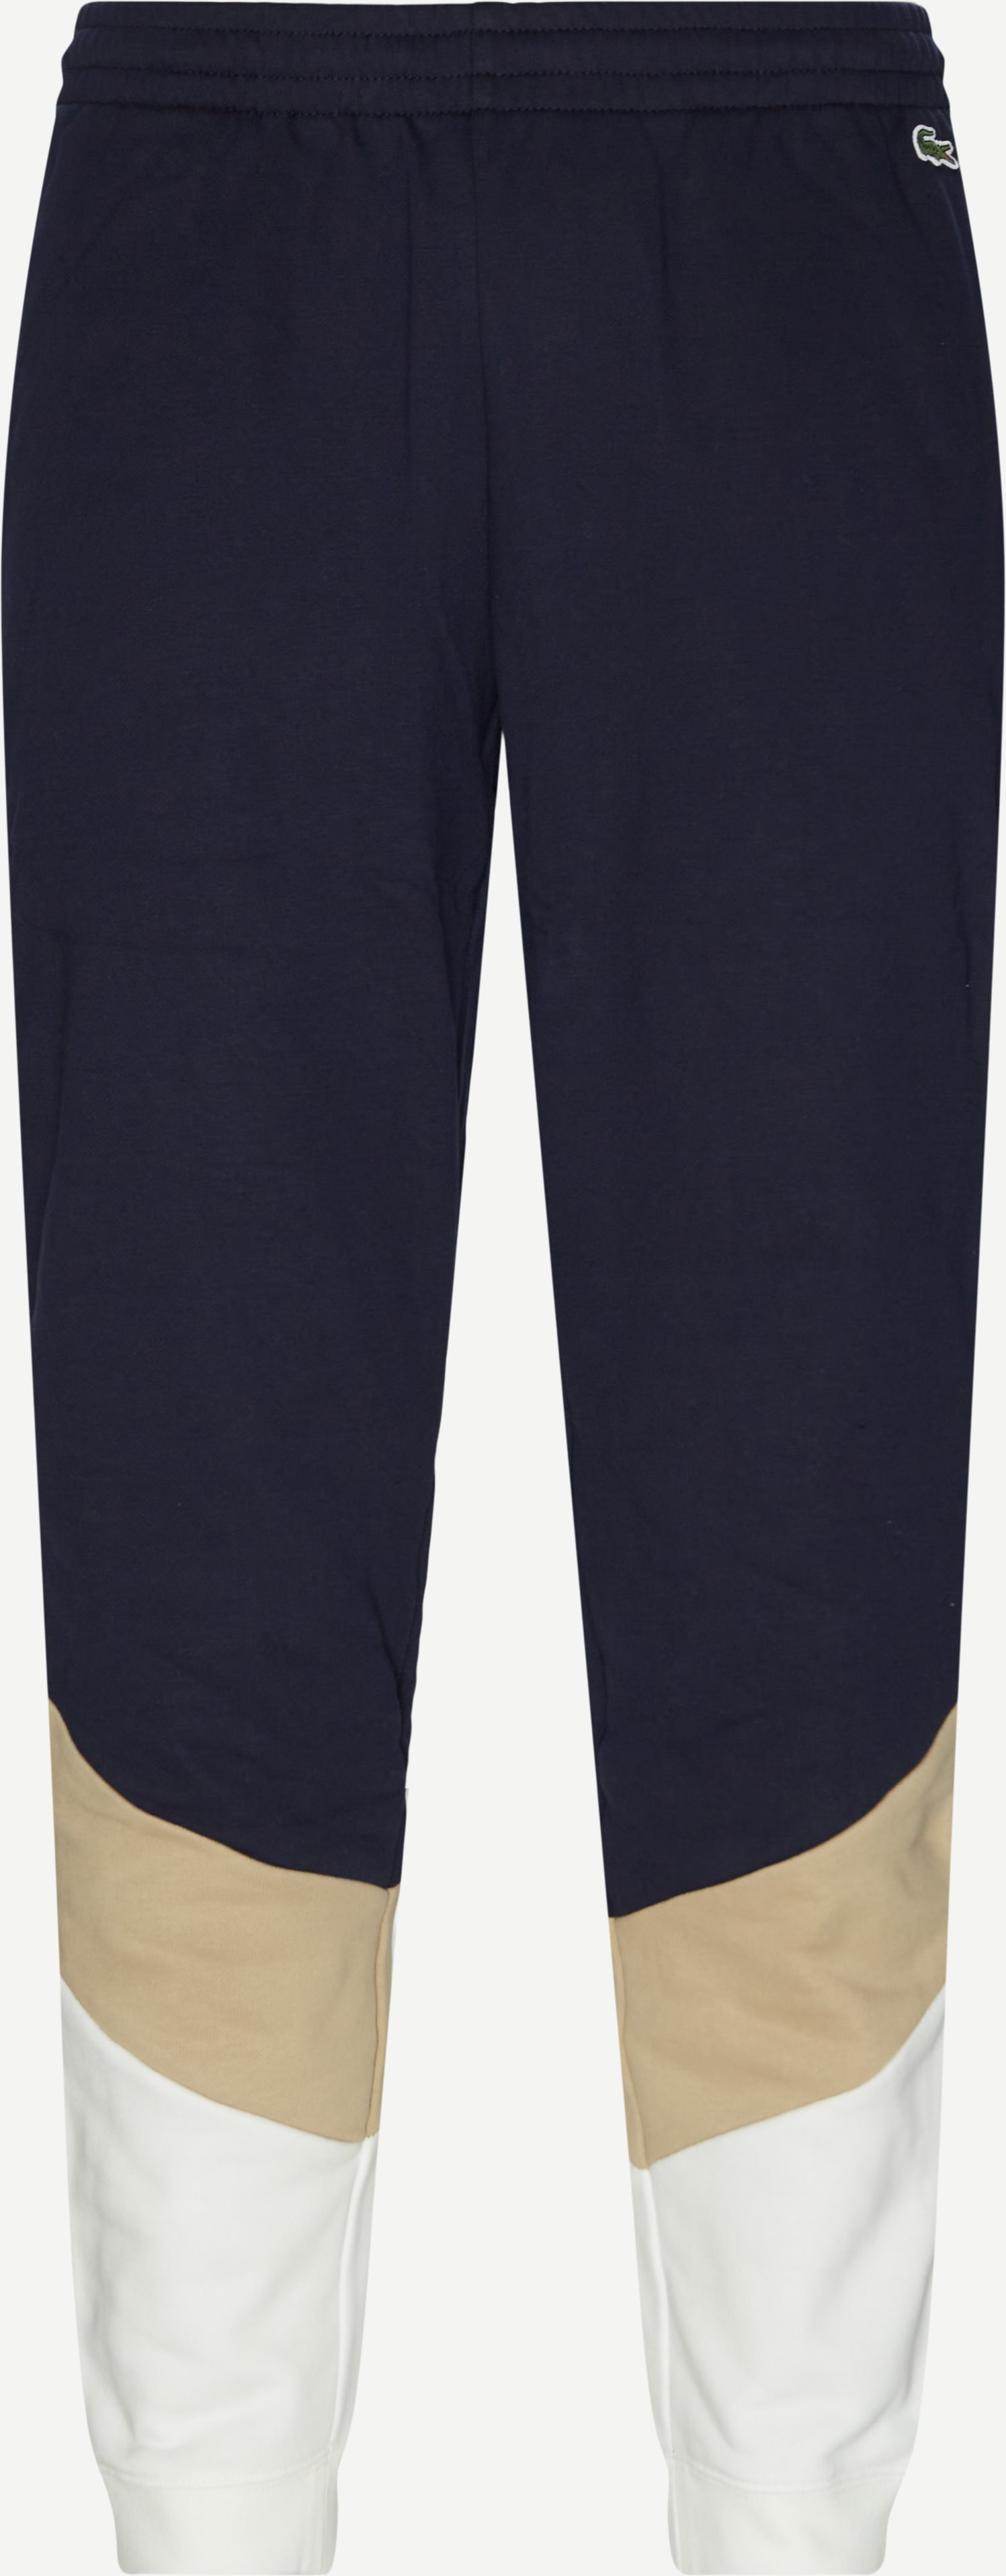 Signature Striped Colorblock Fleece Jogging Pants - Bukser - Tapered fit - Blå